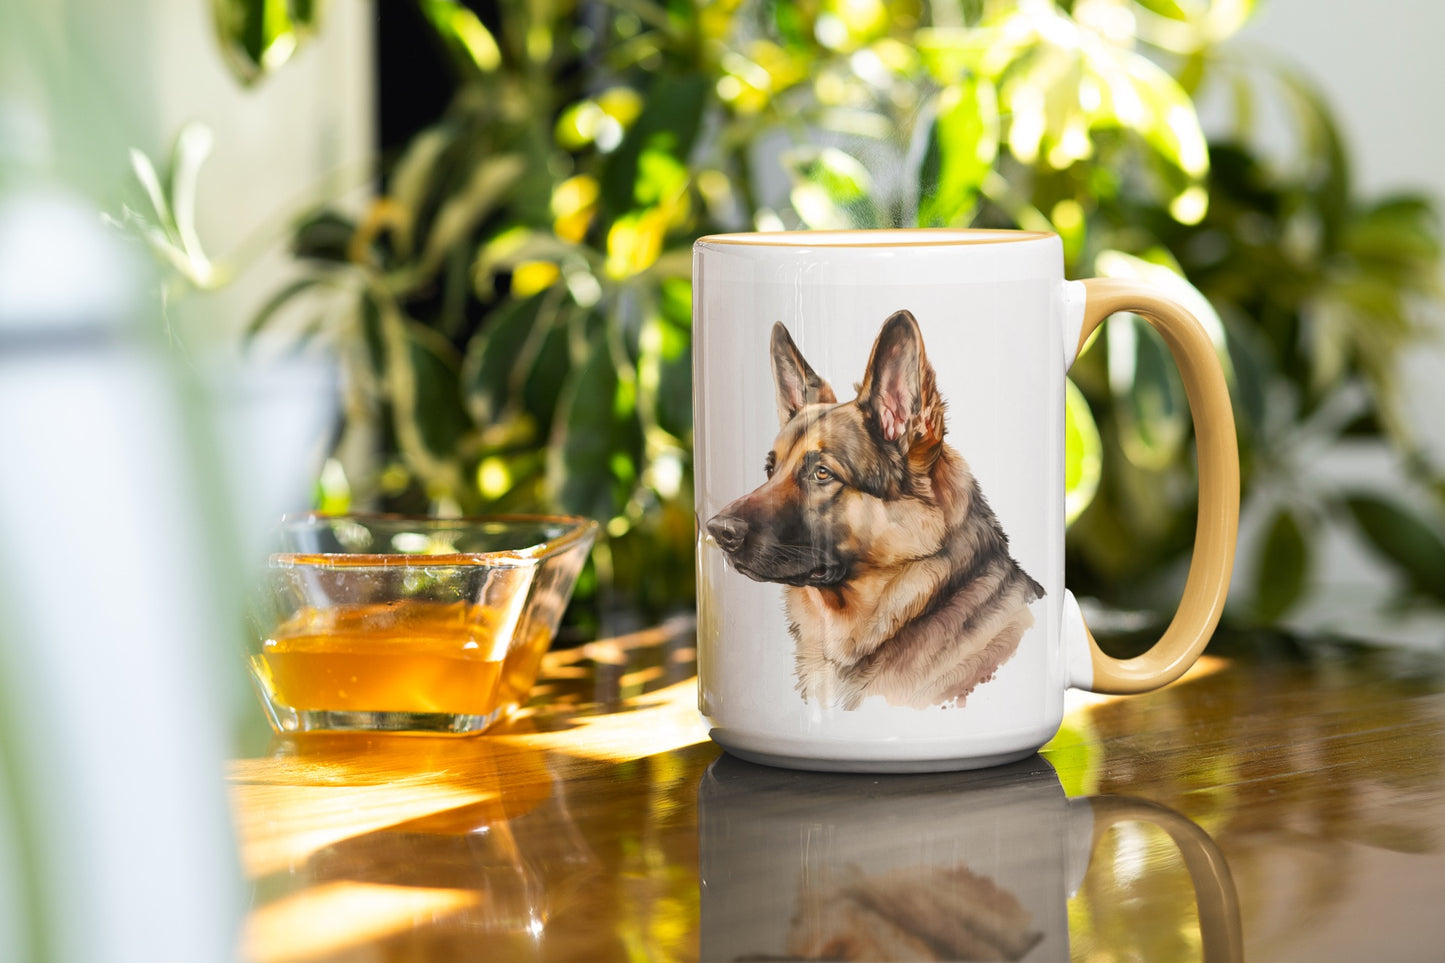 German Shepherd Dogs Collection Art Personalised Ceramic Mug Gift Idea